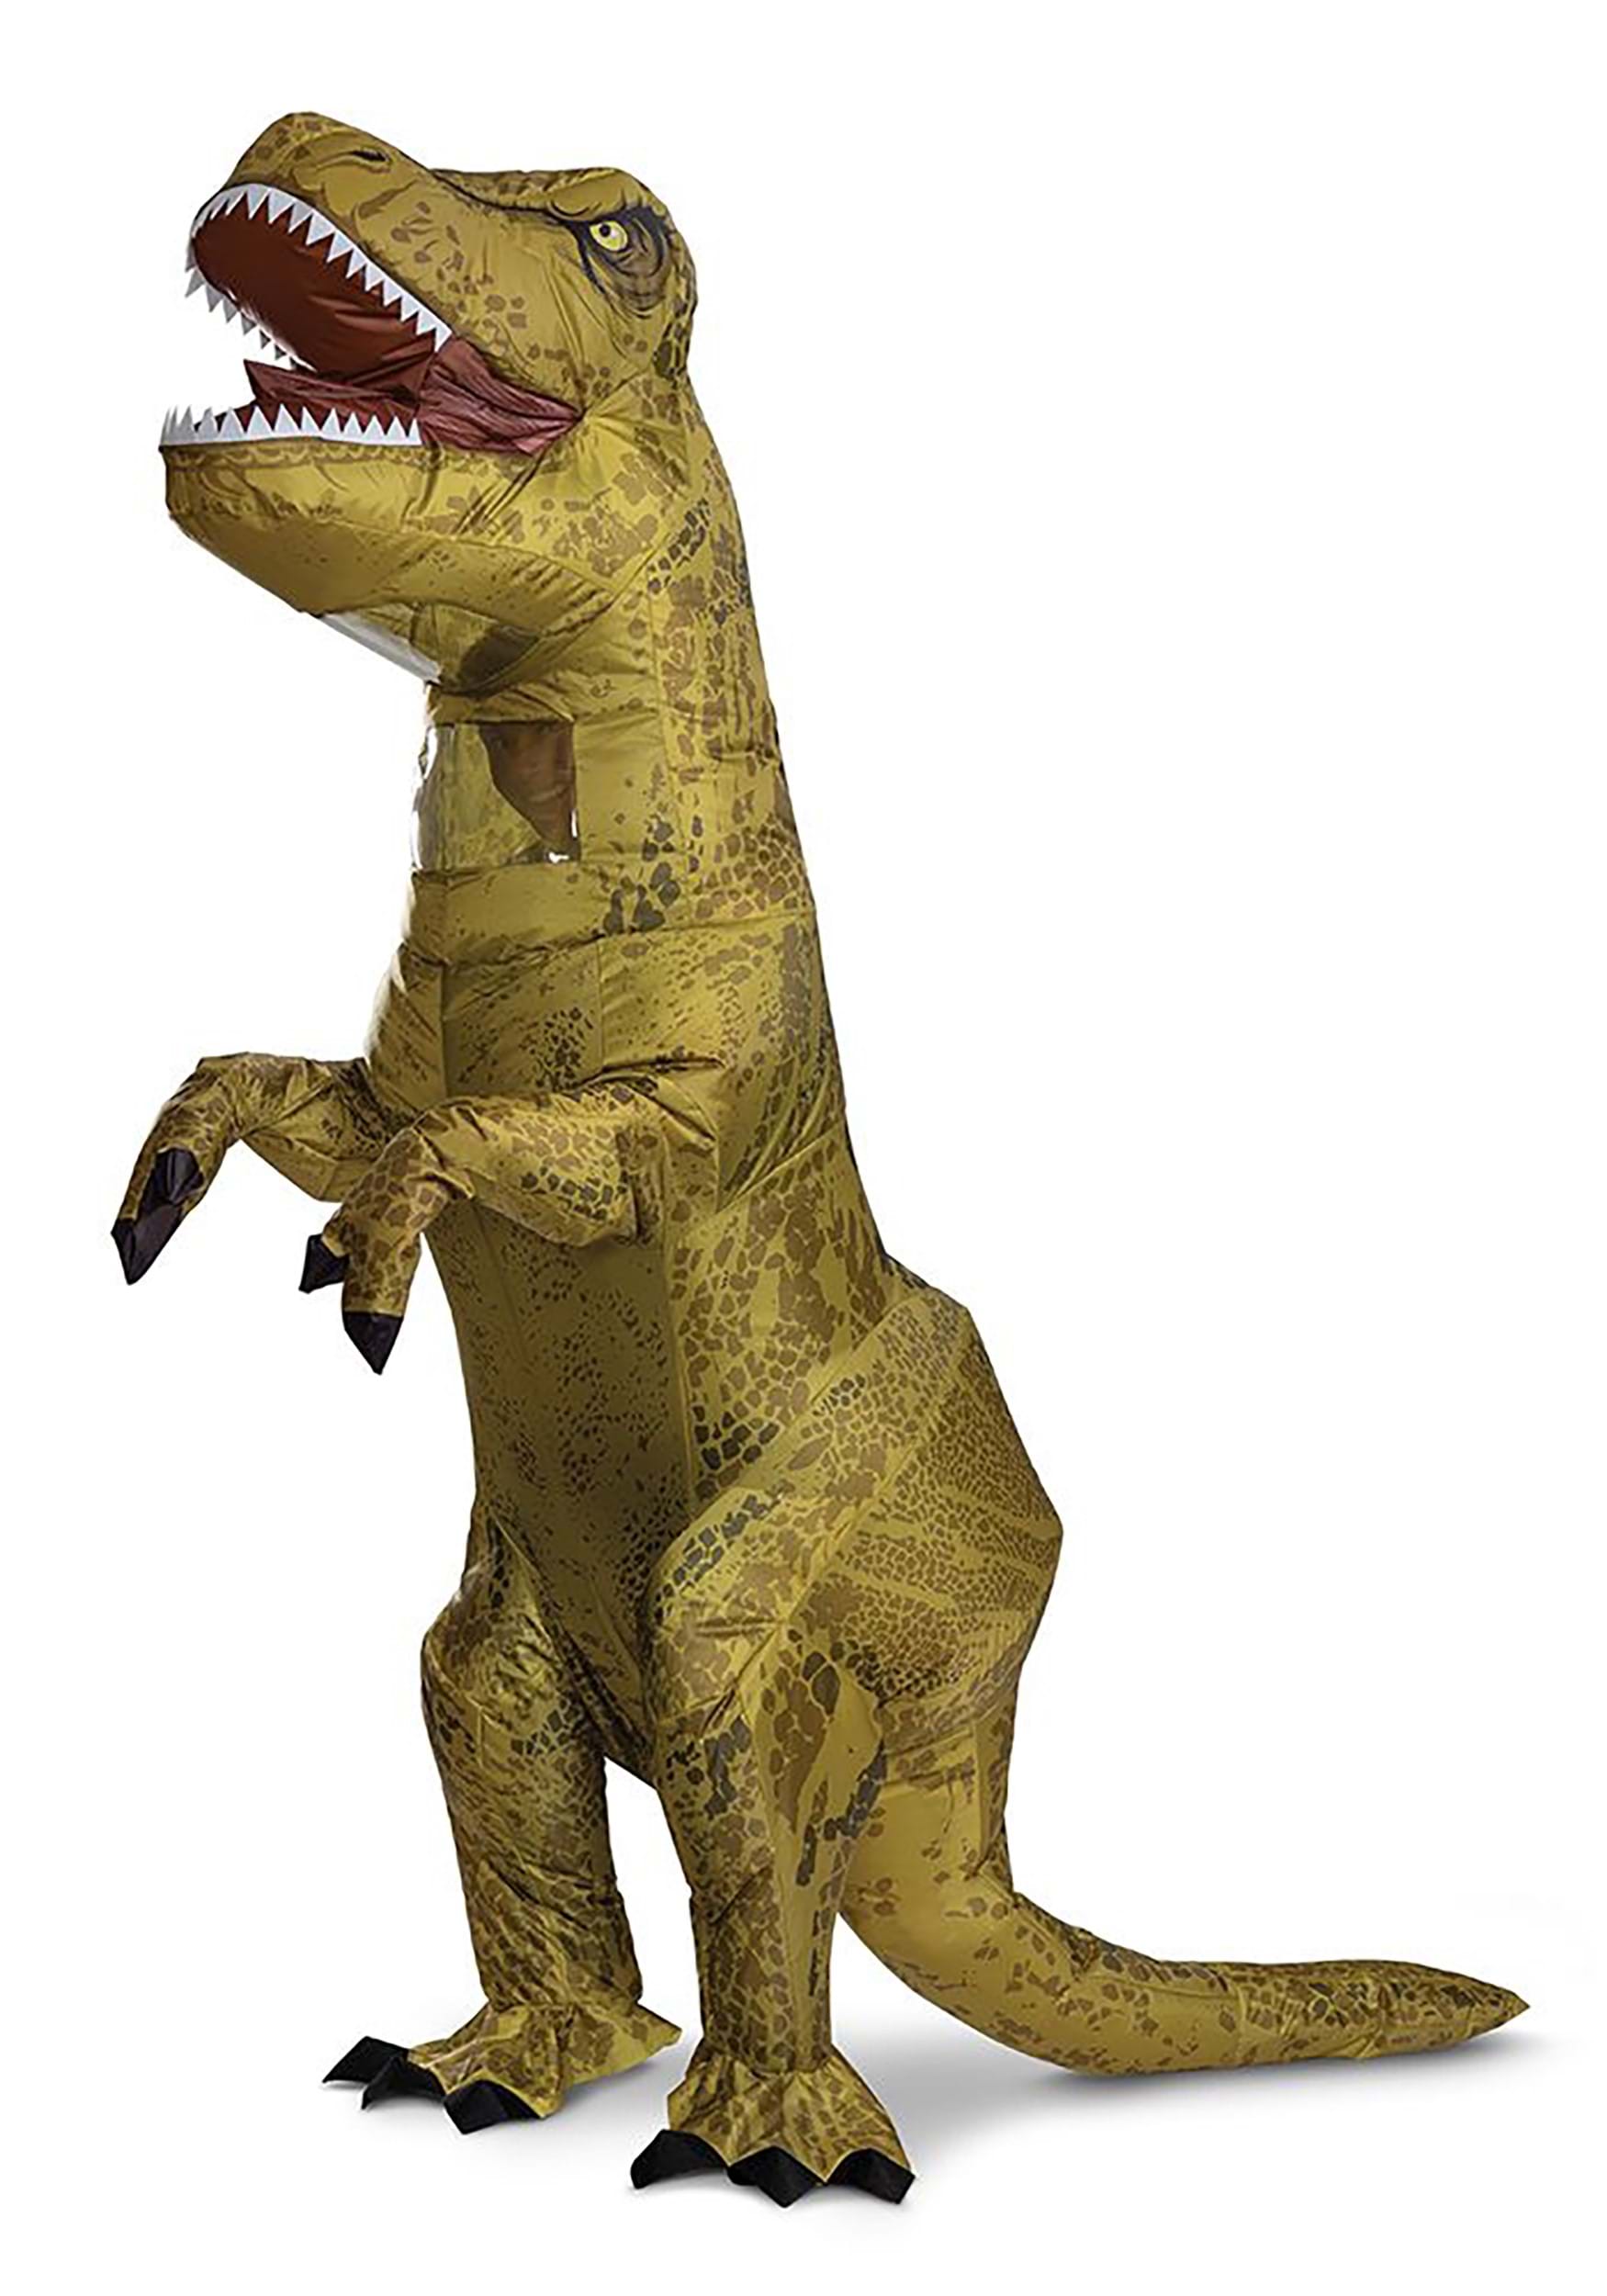 Jurassic World T-Rex Inflatable Adult Fancy Dress Costume